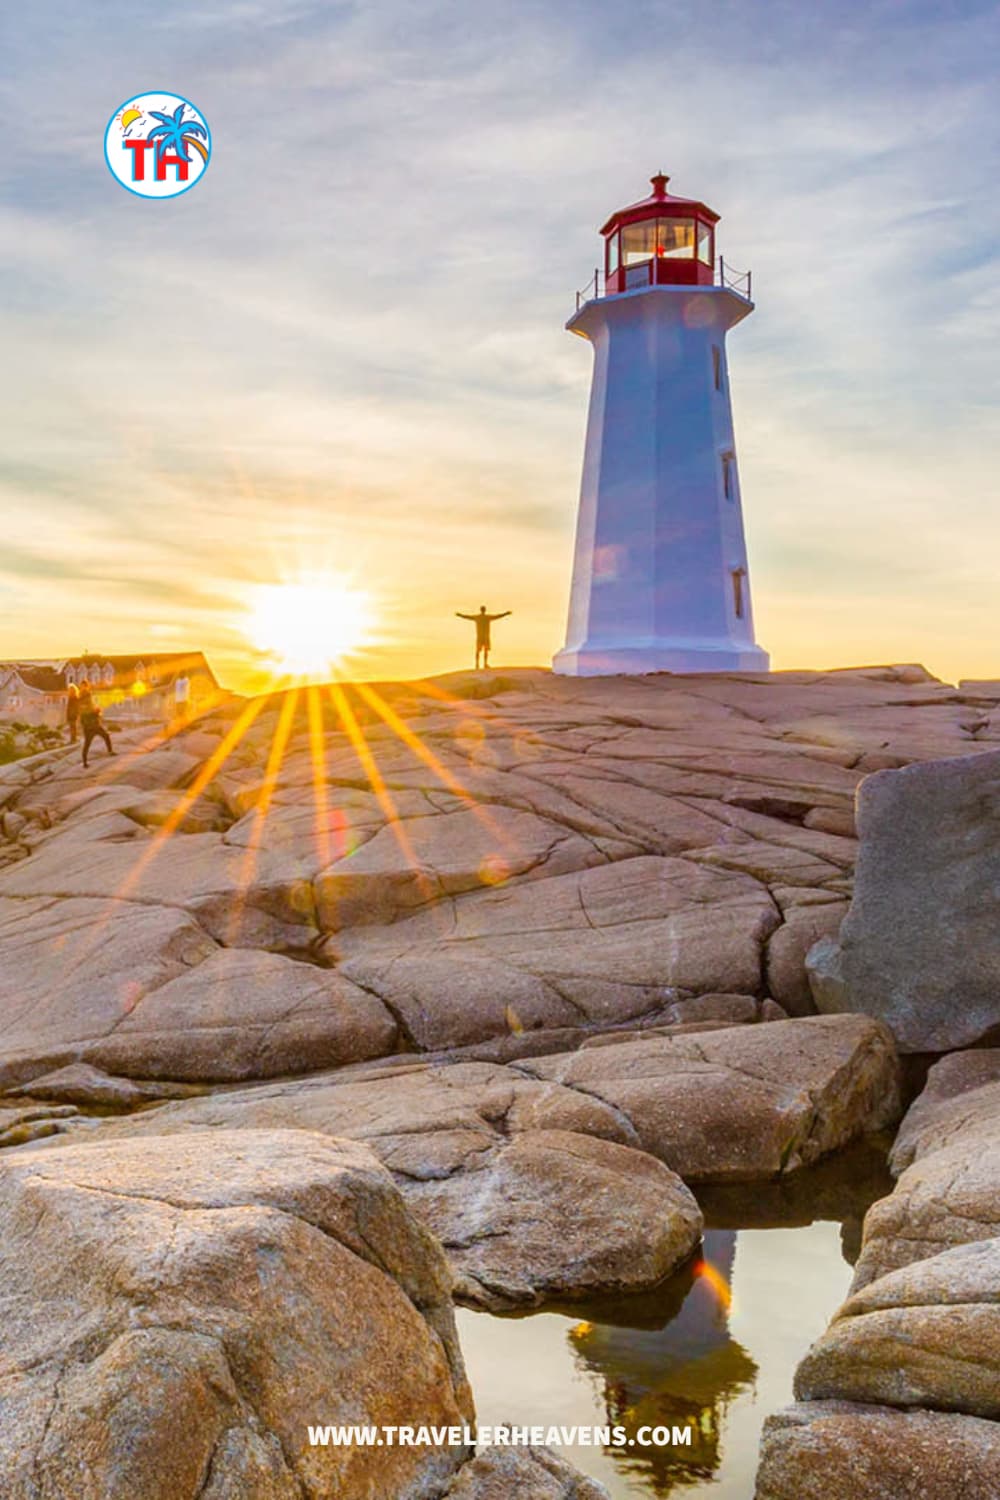 Beautiful Destinations, Best Places to Visit in Nova Scotia, Canada, Canada Travel Guide, Travel to Nova Scotia, Visit Nova Scotia